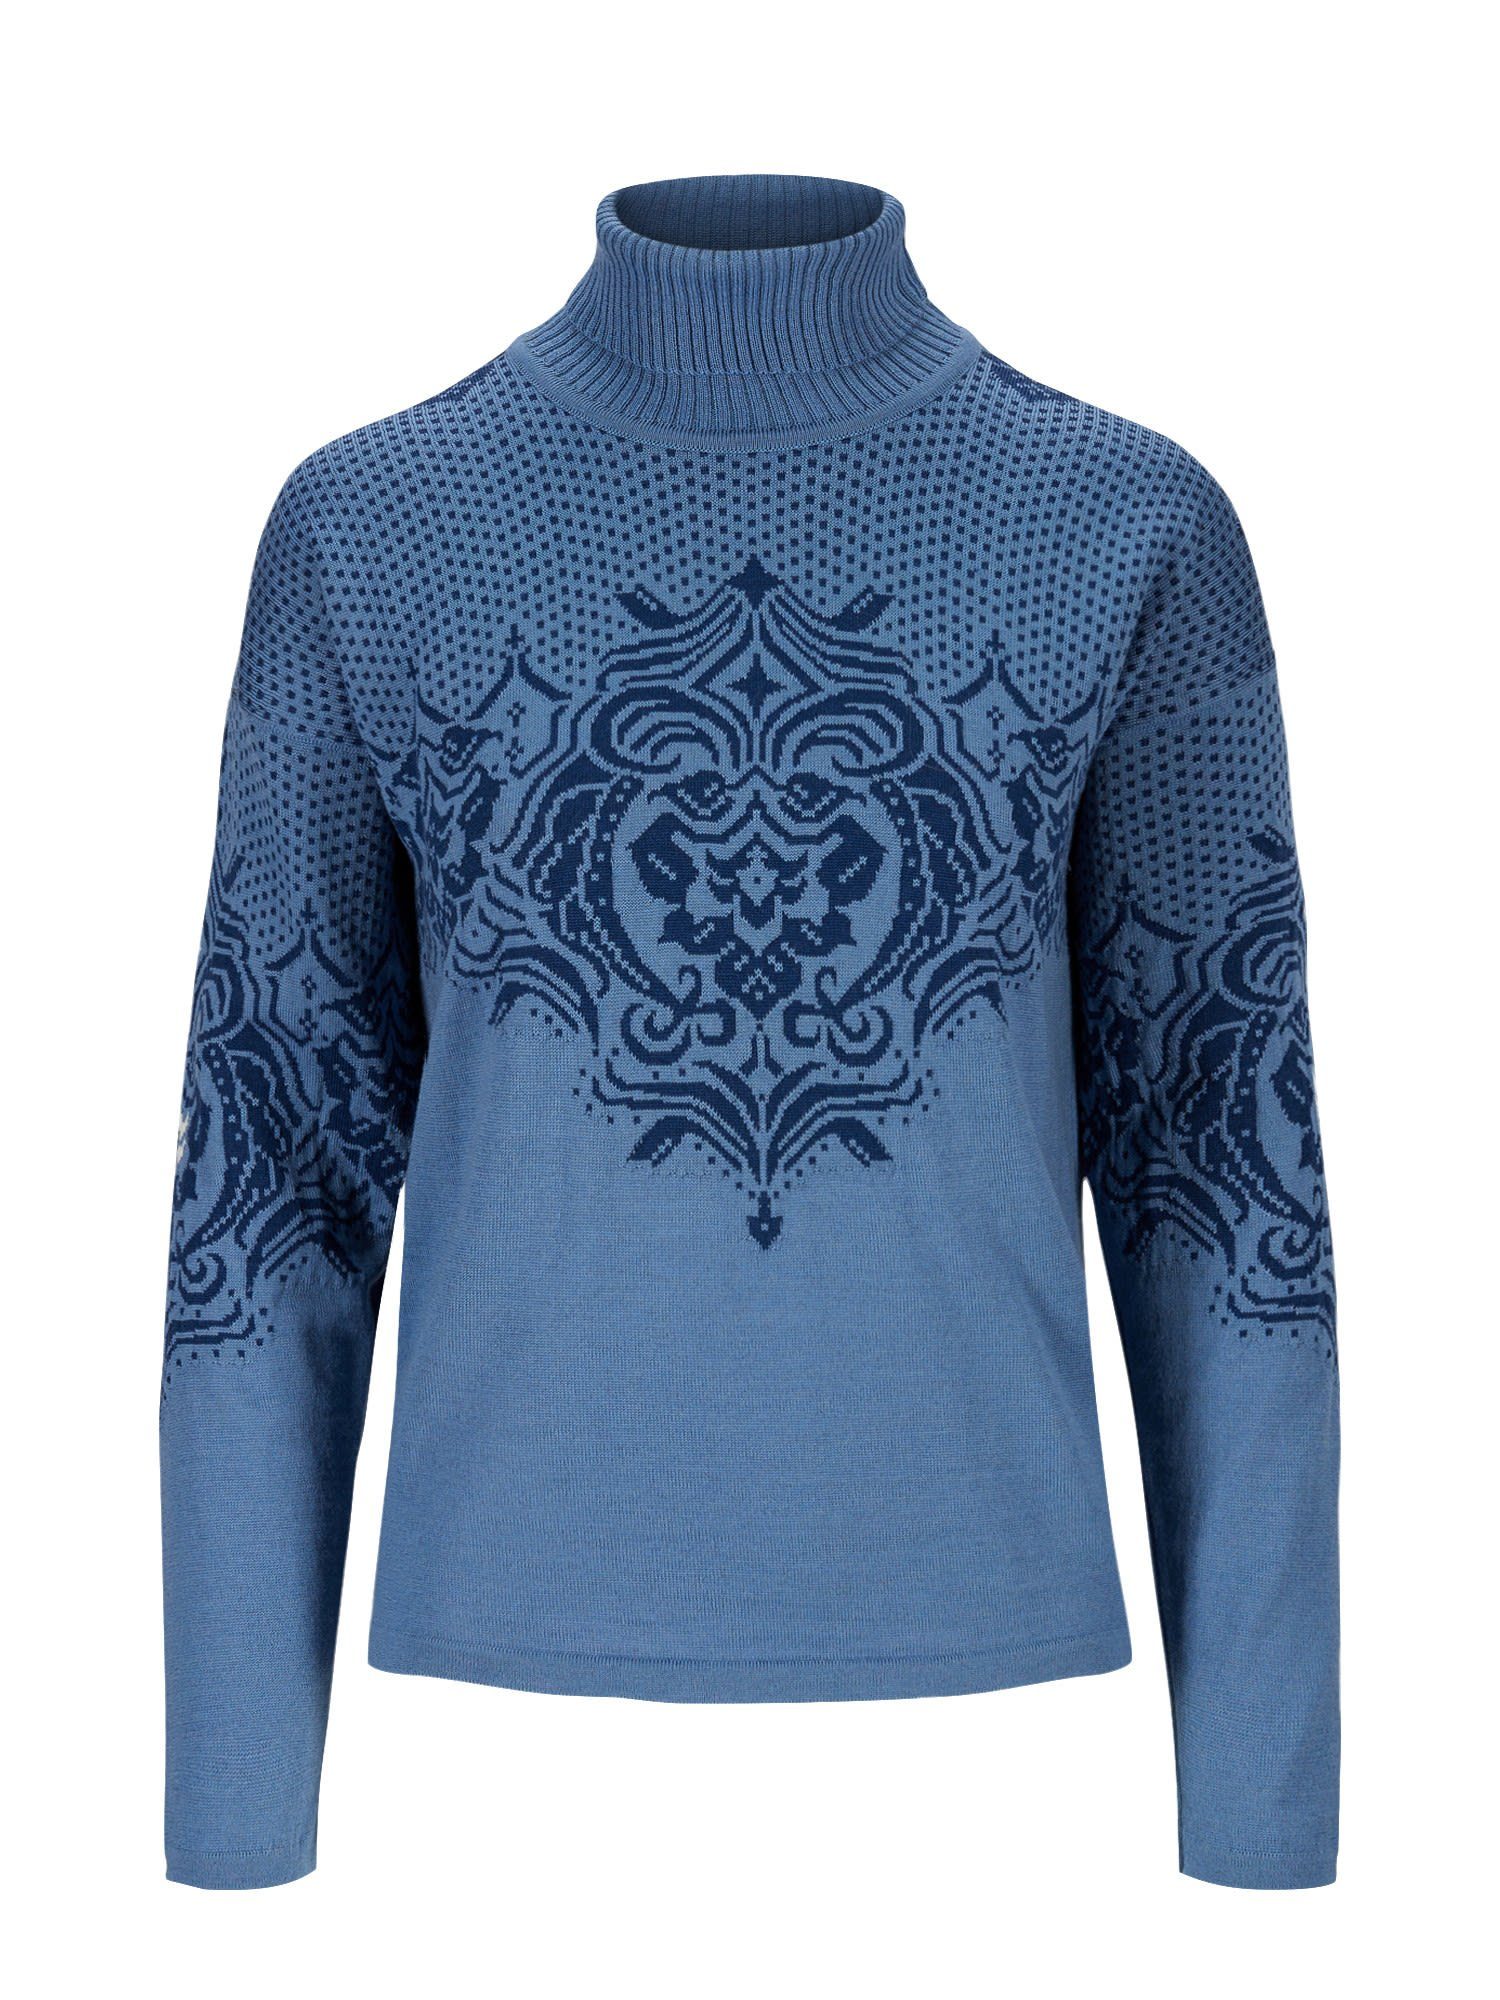 Fleecepullover Damen Sweater Blueshadow of - Norway Sweater Indigo Dale Norway W Dale Of Rosendal